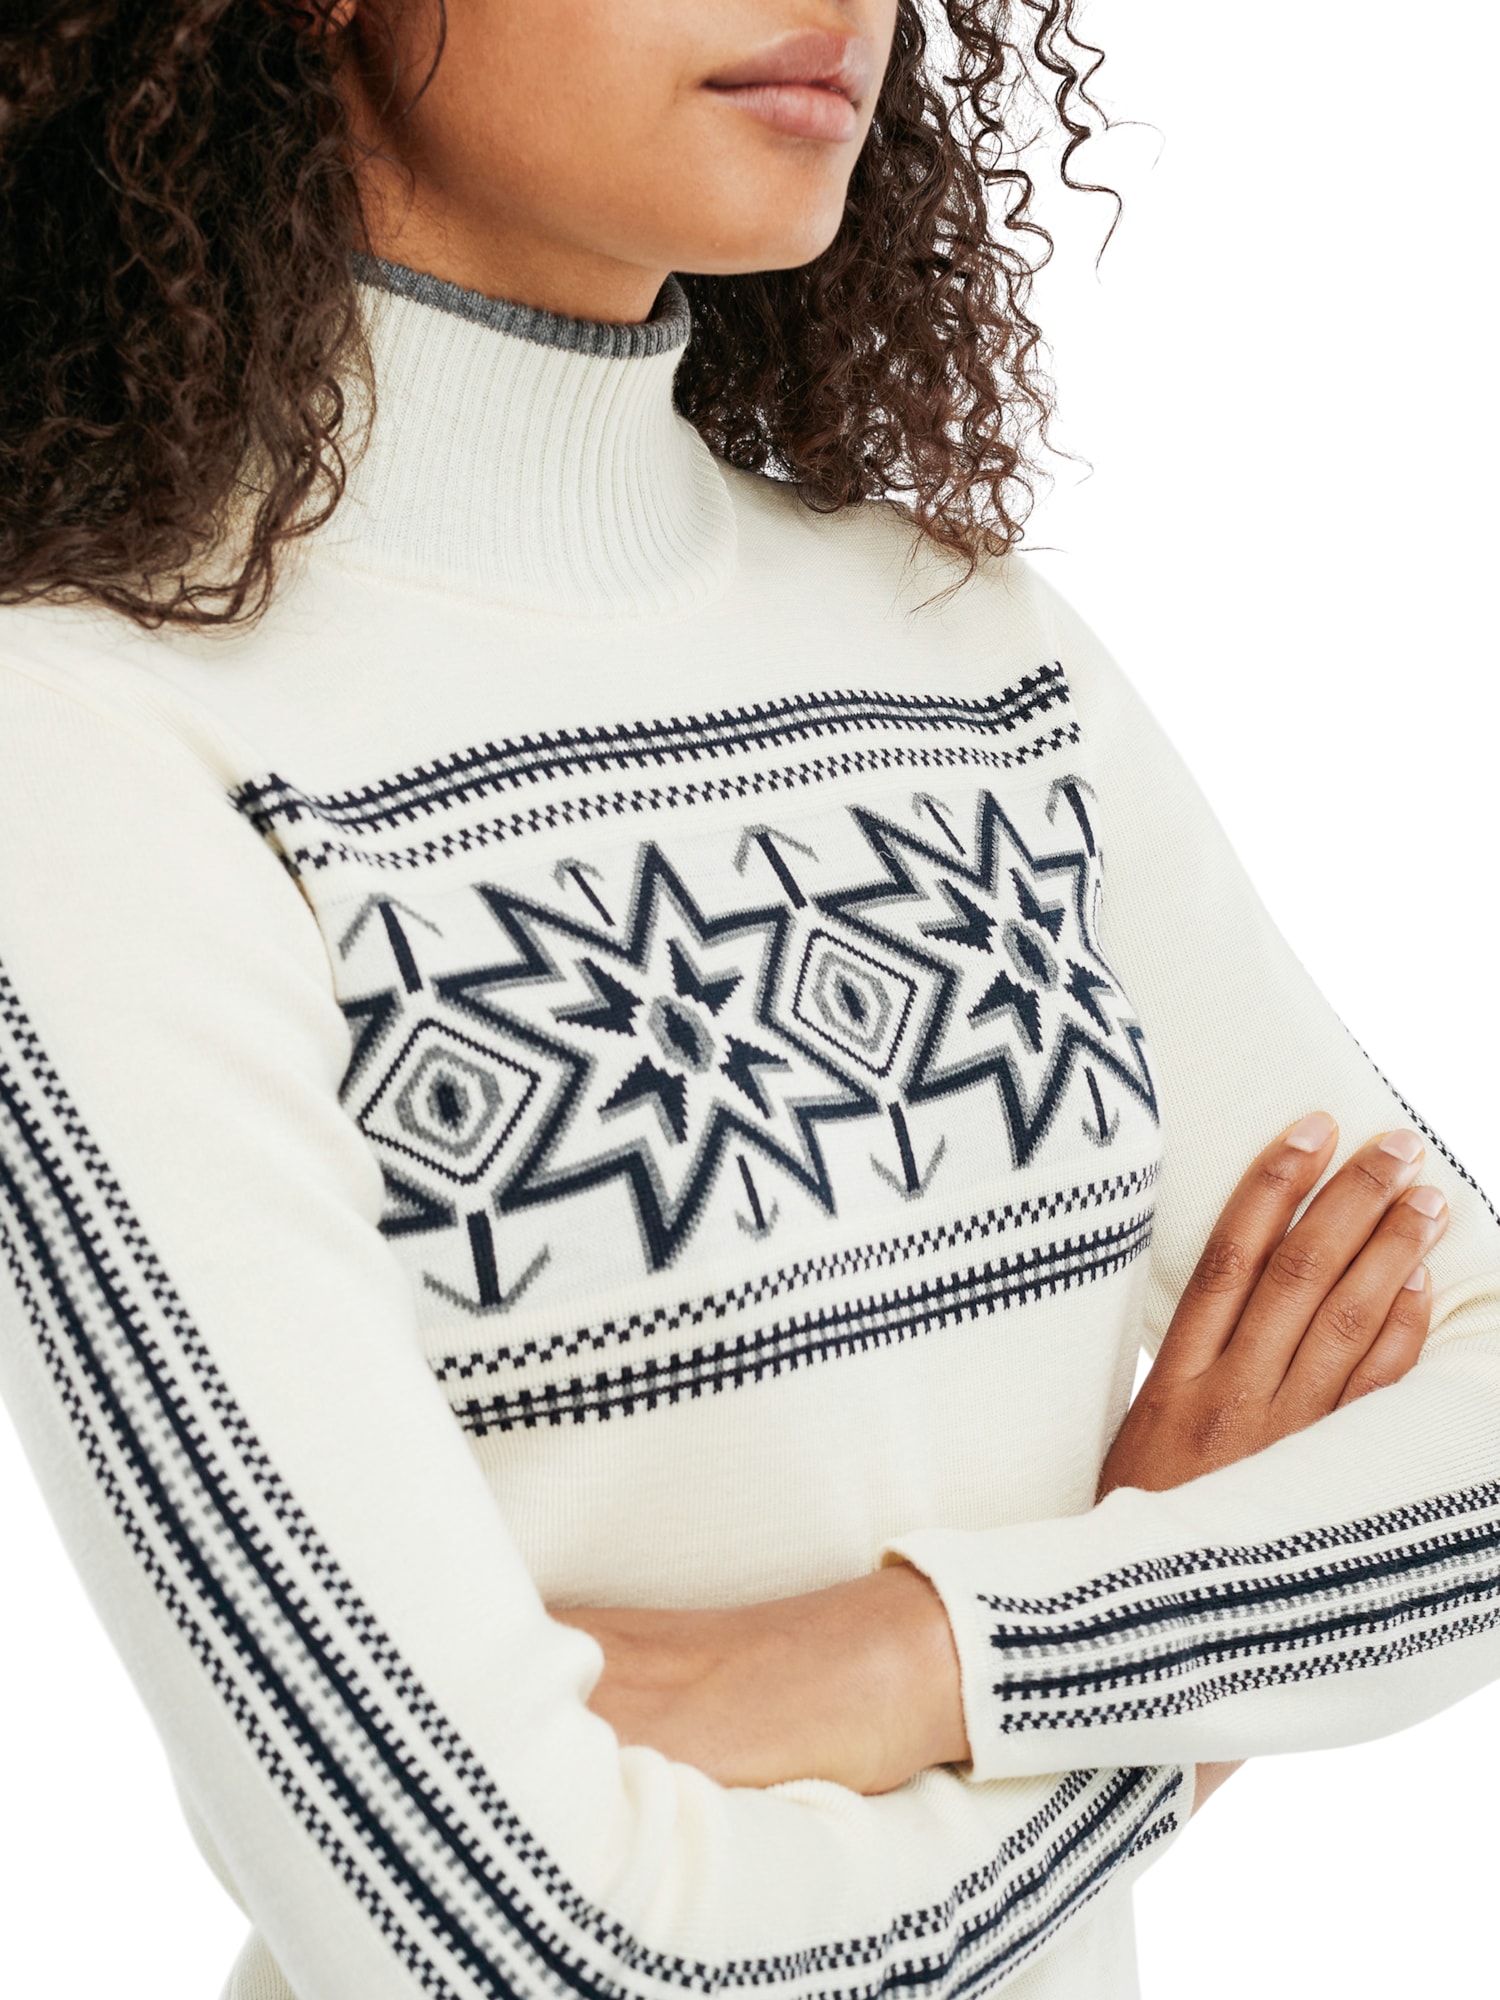 ELESOL Women's V Neck Sweater Vest Sleeveless Sweater Knitwear Tank Top  Soft Knitted Vest Camel XXL - ShopStyle